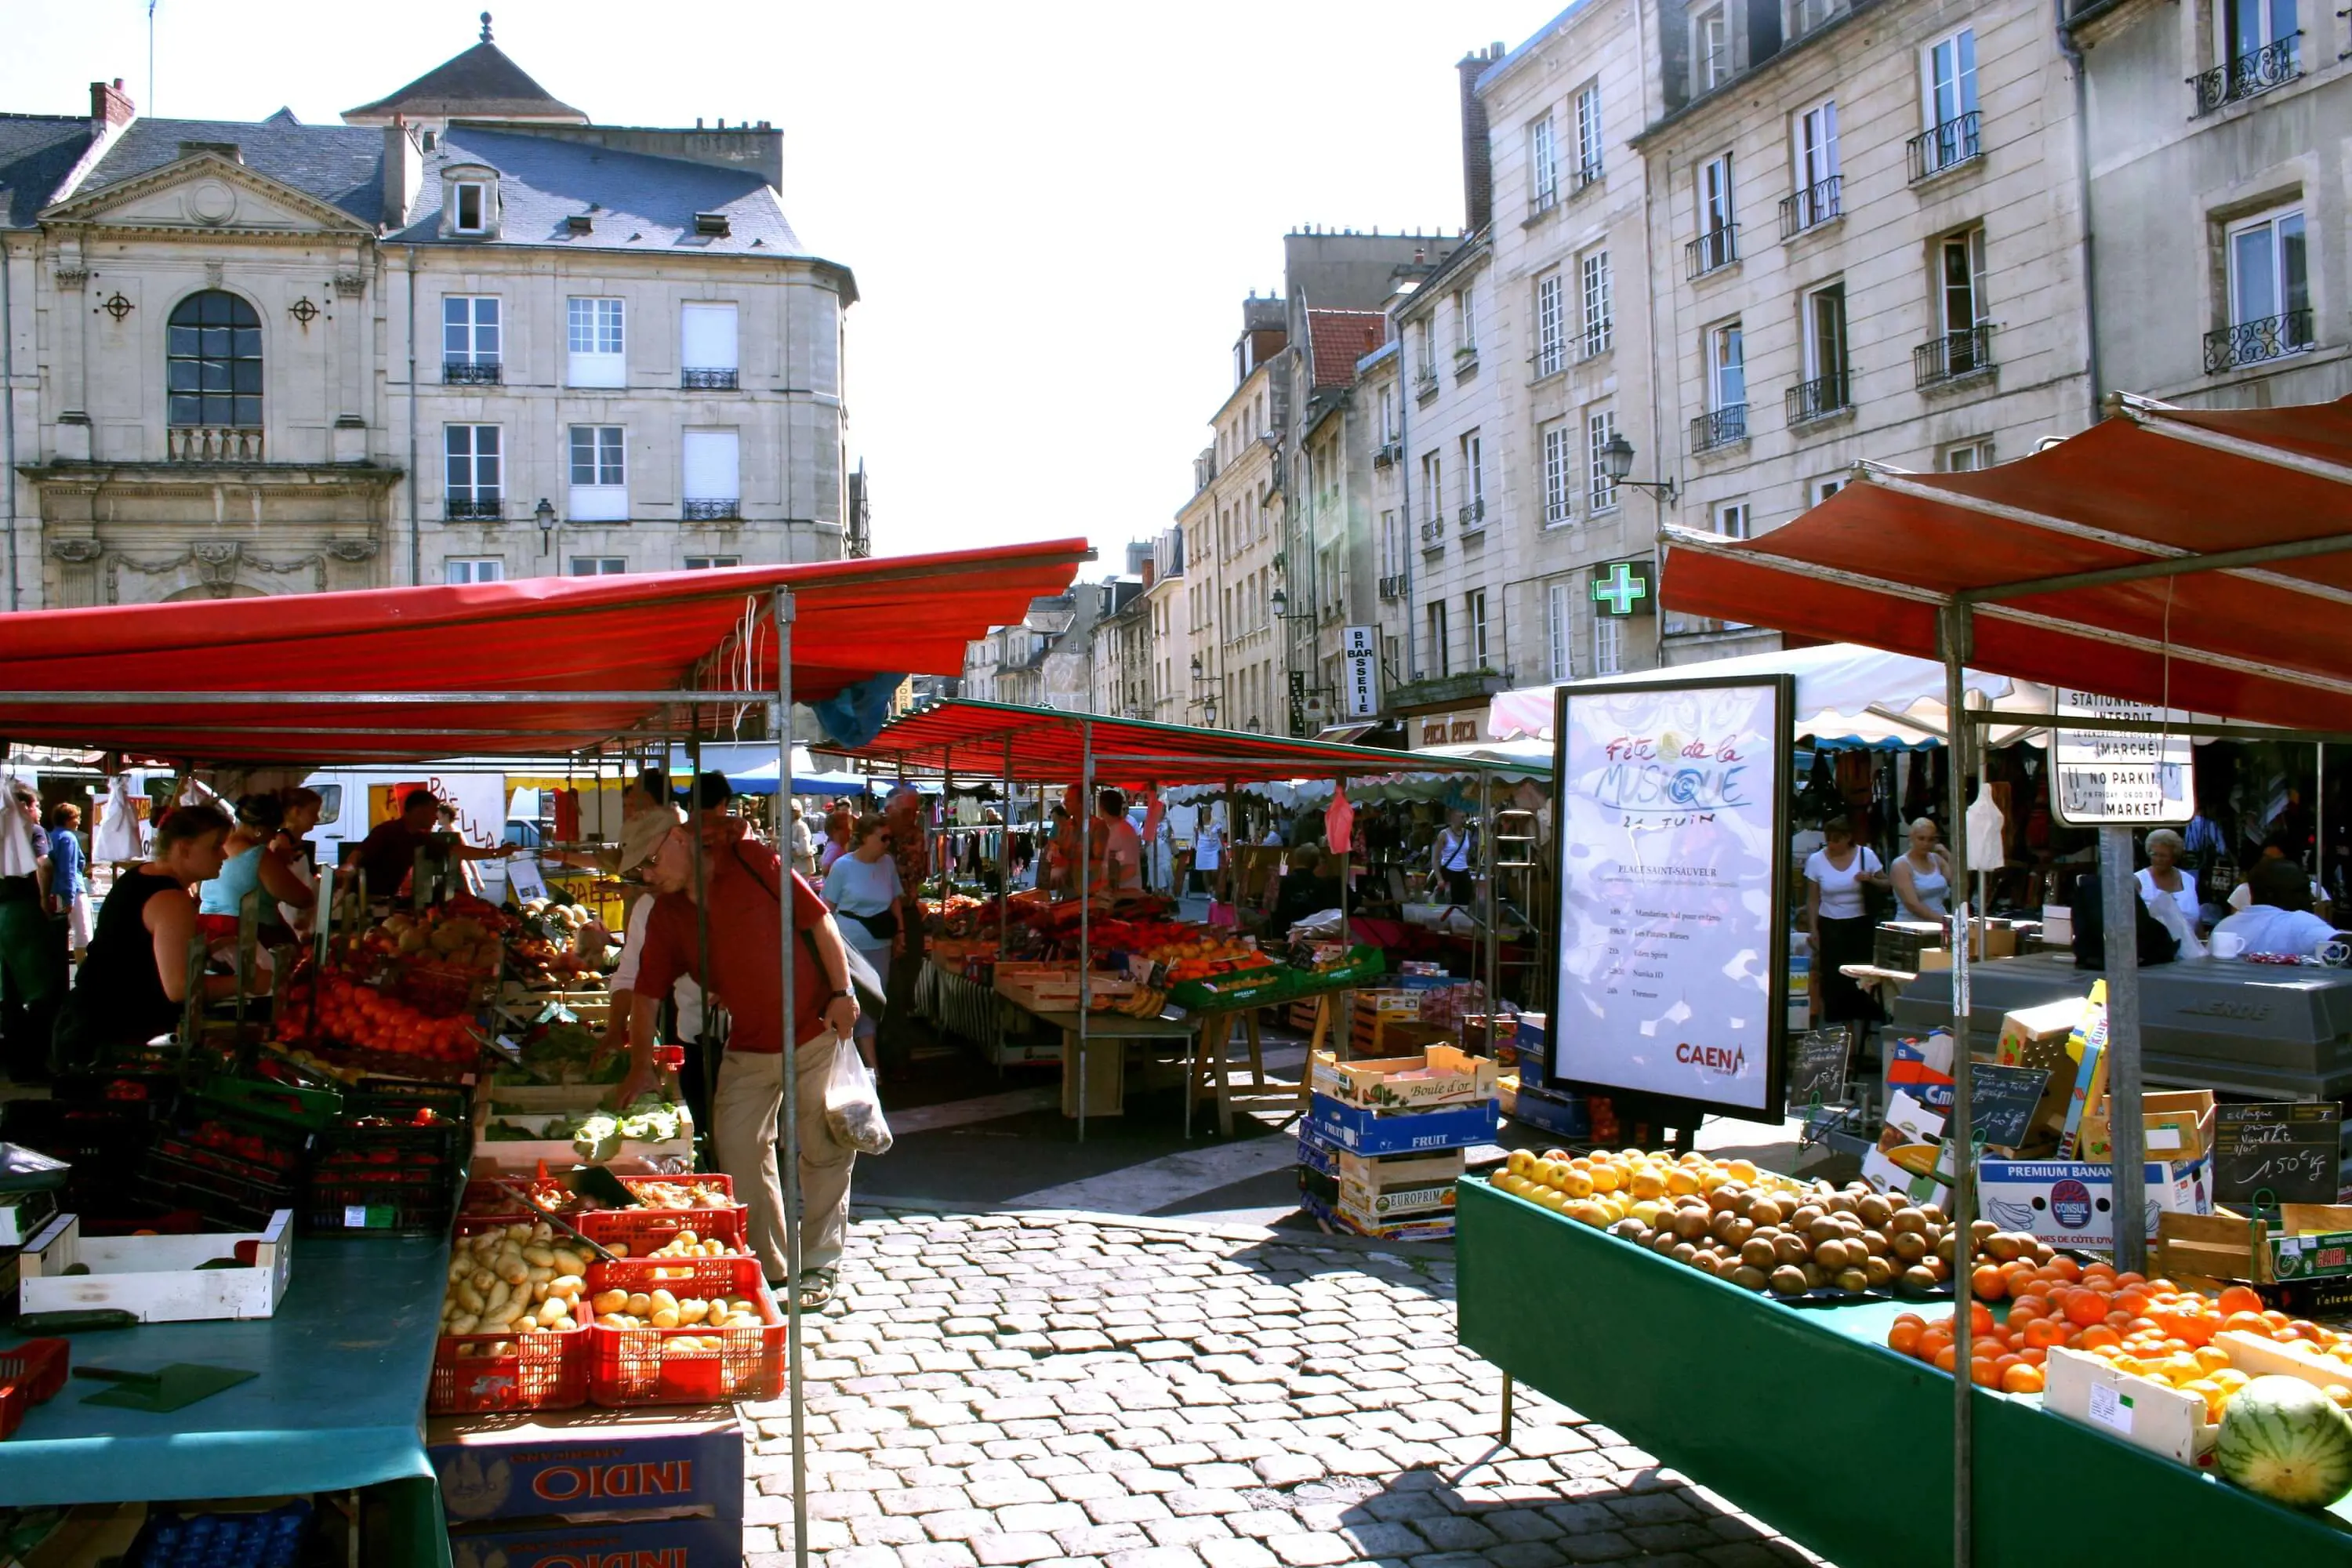 Normandy - Caen Market